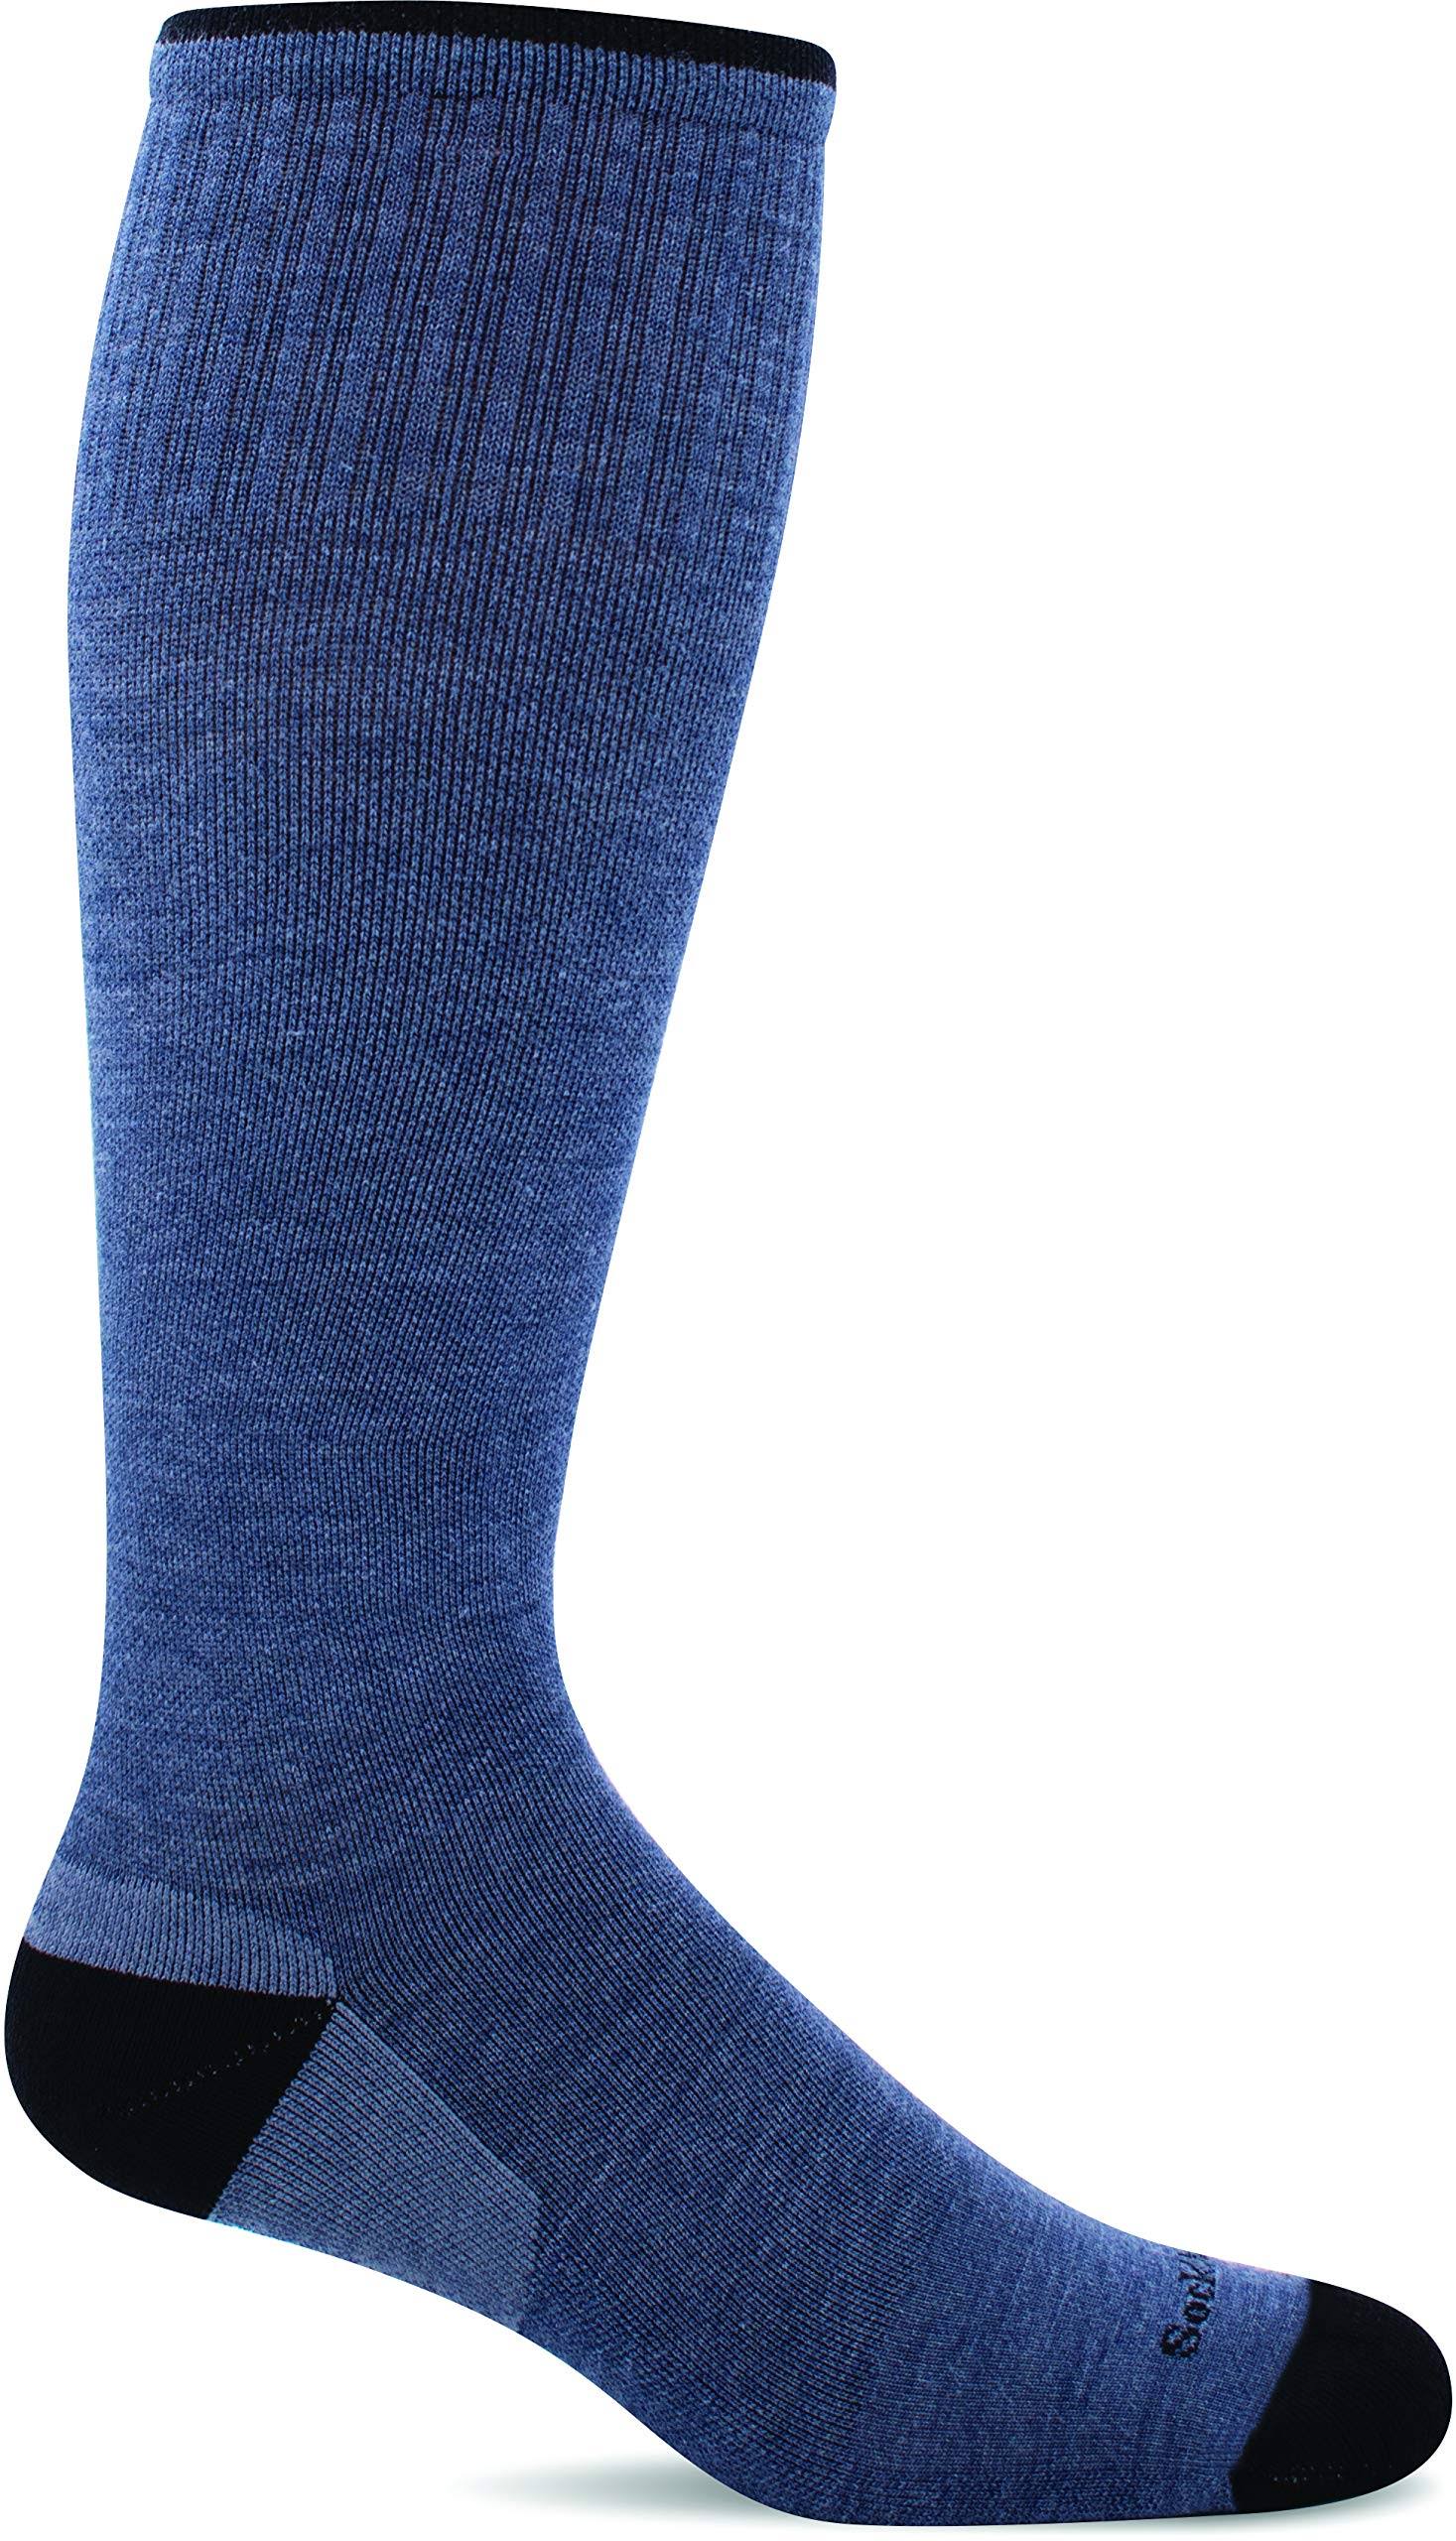 Sockwell Mens Circulator Compression Socks - Large and X-Large, Denim